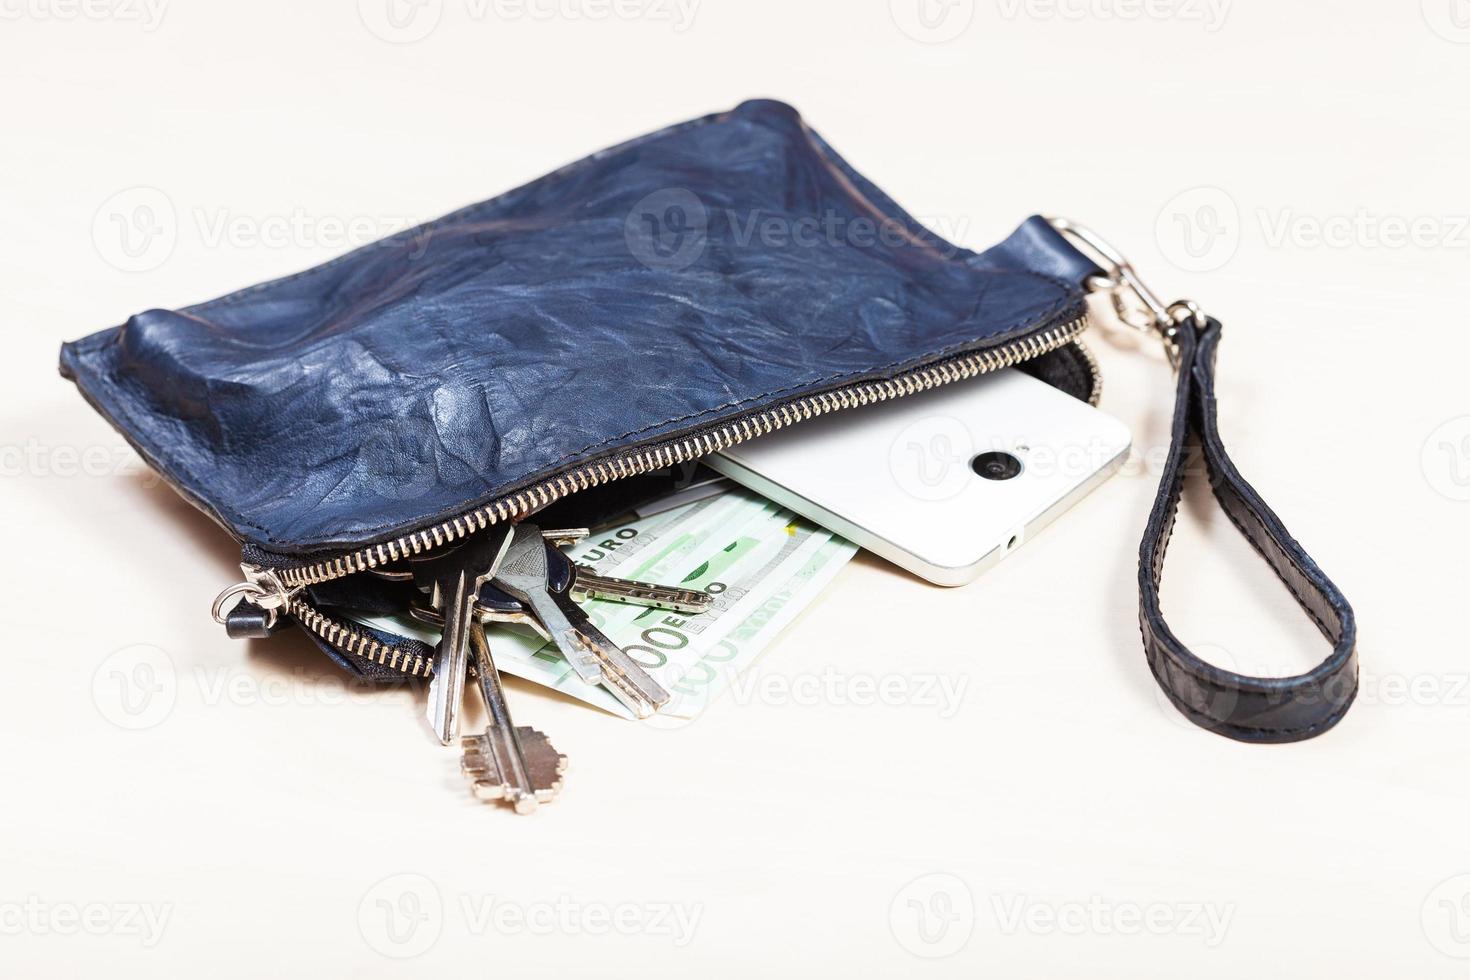 handbag with phone, keys and euro notes on table photo